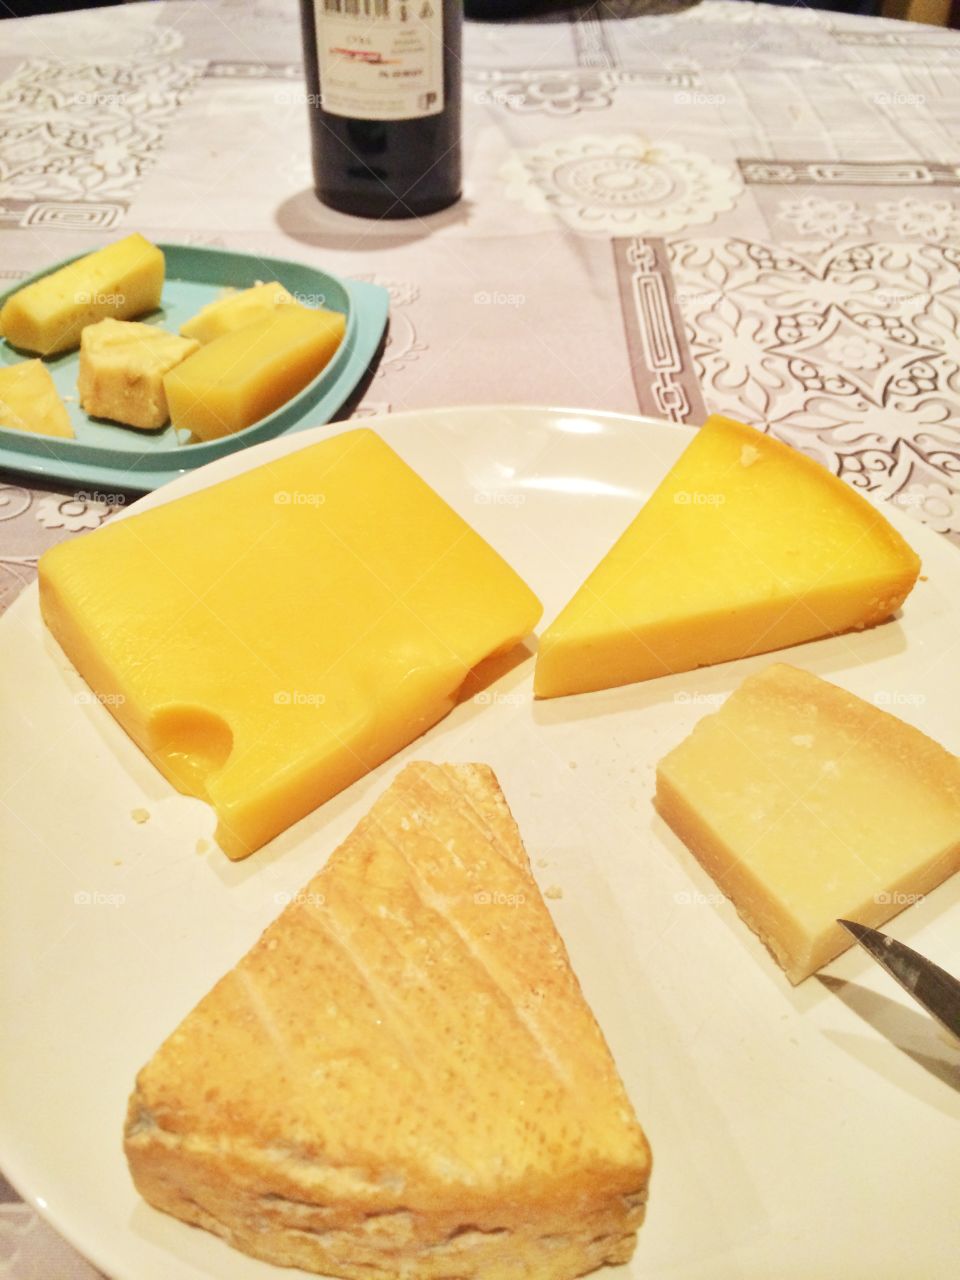 Cheese feast 